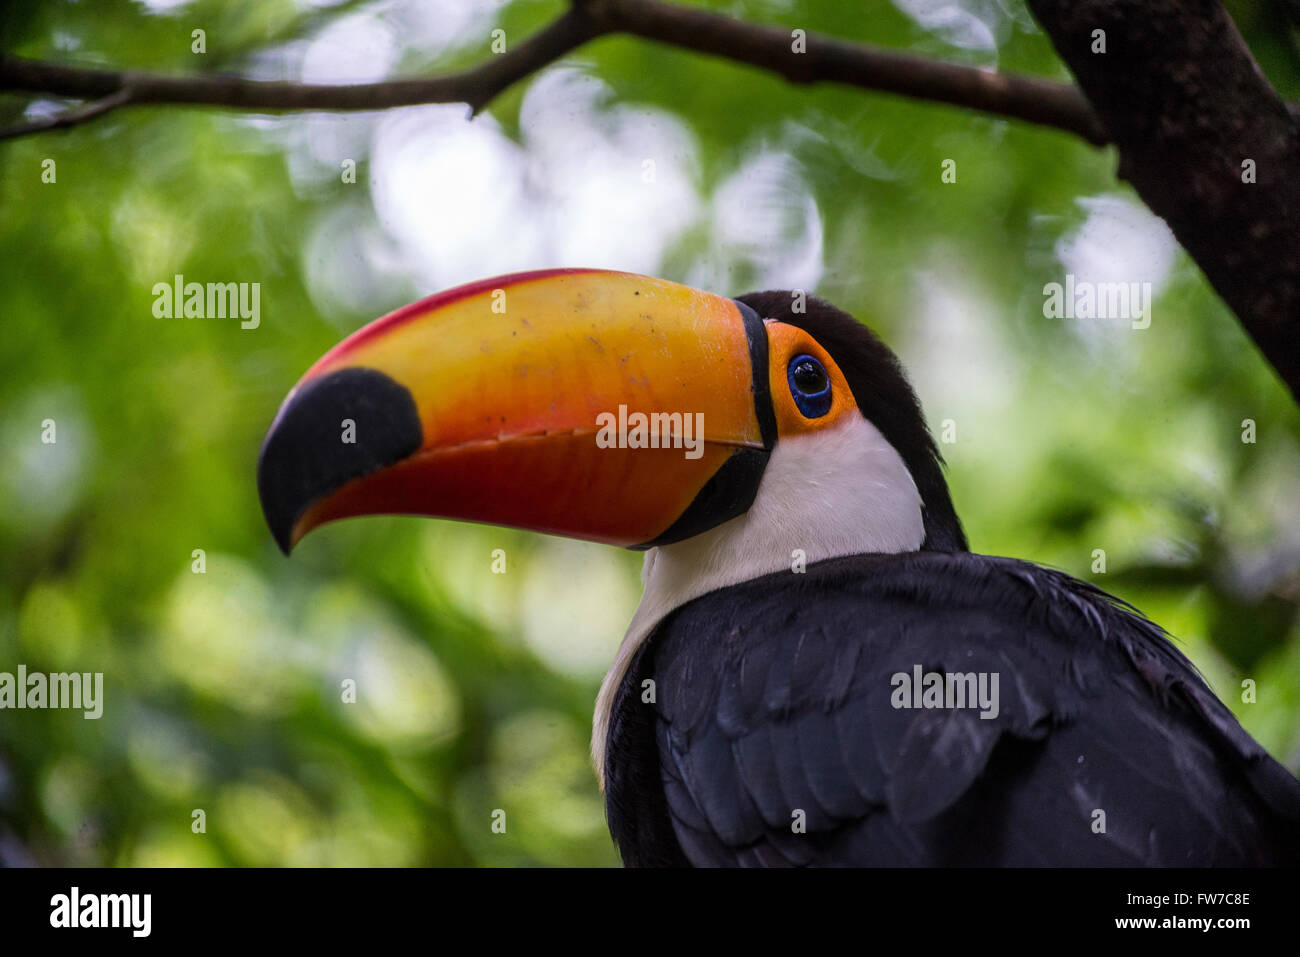 Toco toucan or common toucan, Bird Park, Foz do Iguacu, Brazil Stock Photo